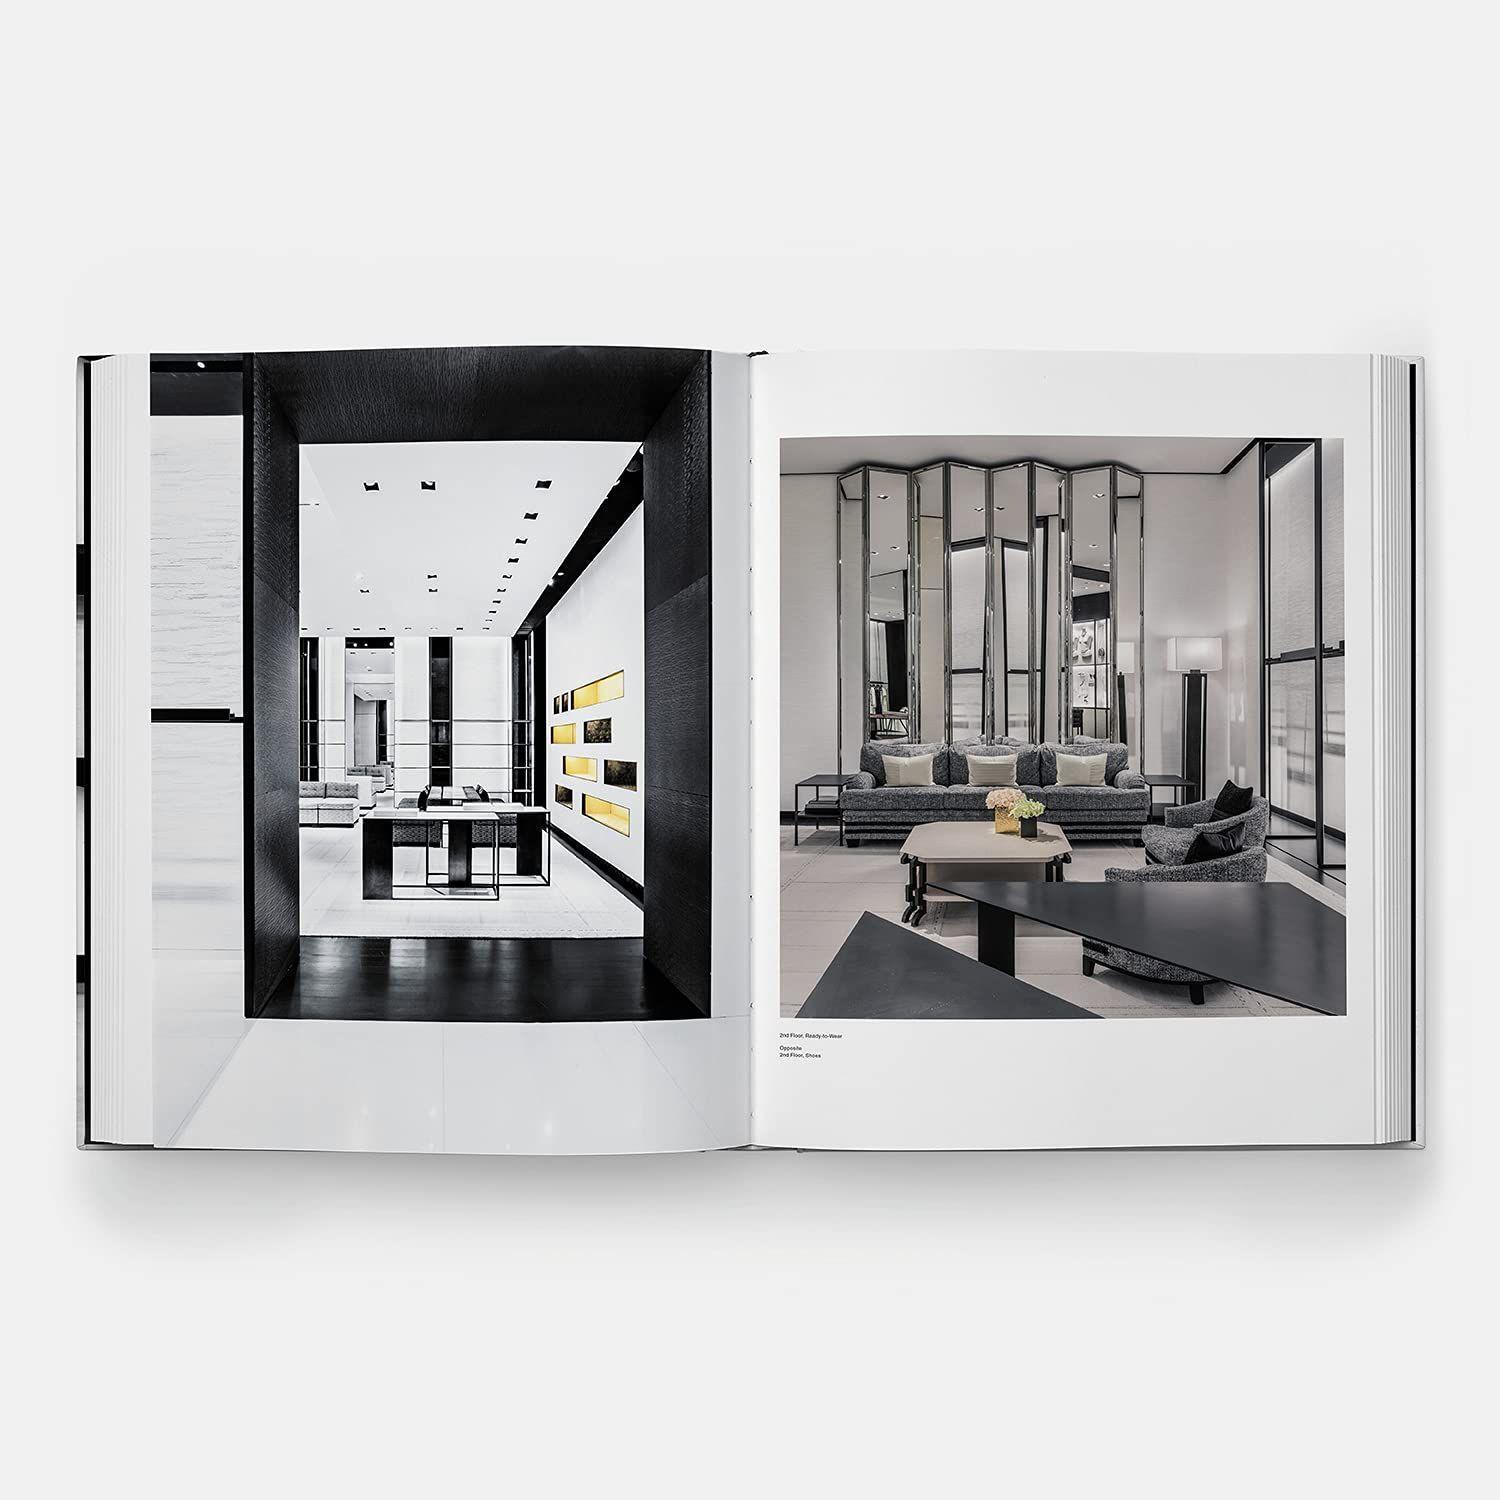 Bild: 9781838663308 | The Architecture of Chanel | Peter Marino | Buch | 280 S. | Englisch